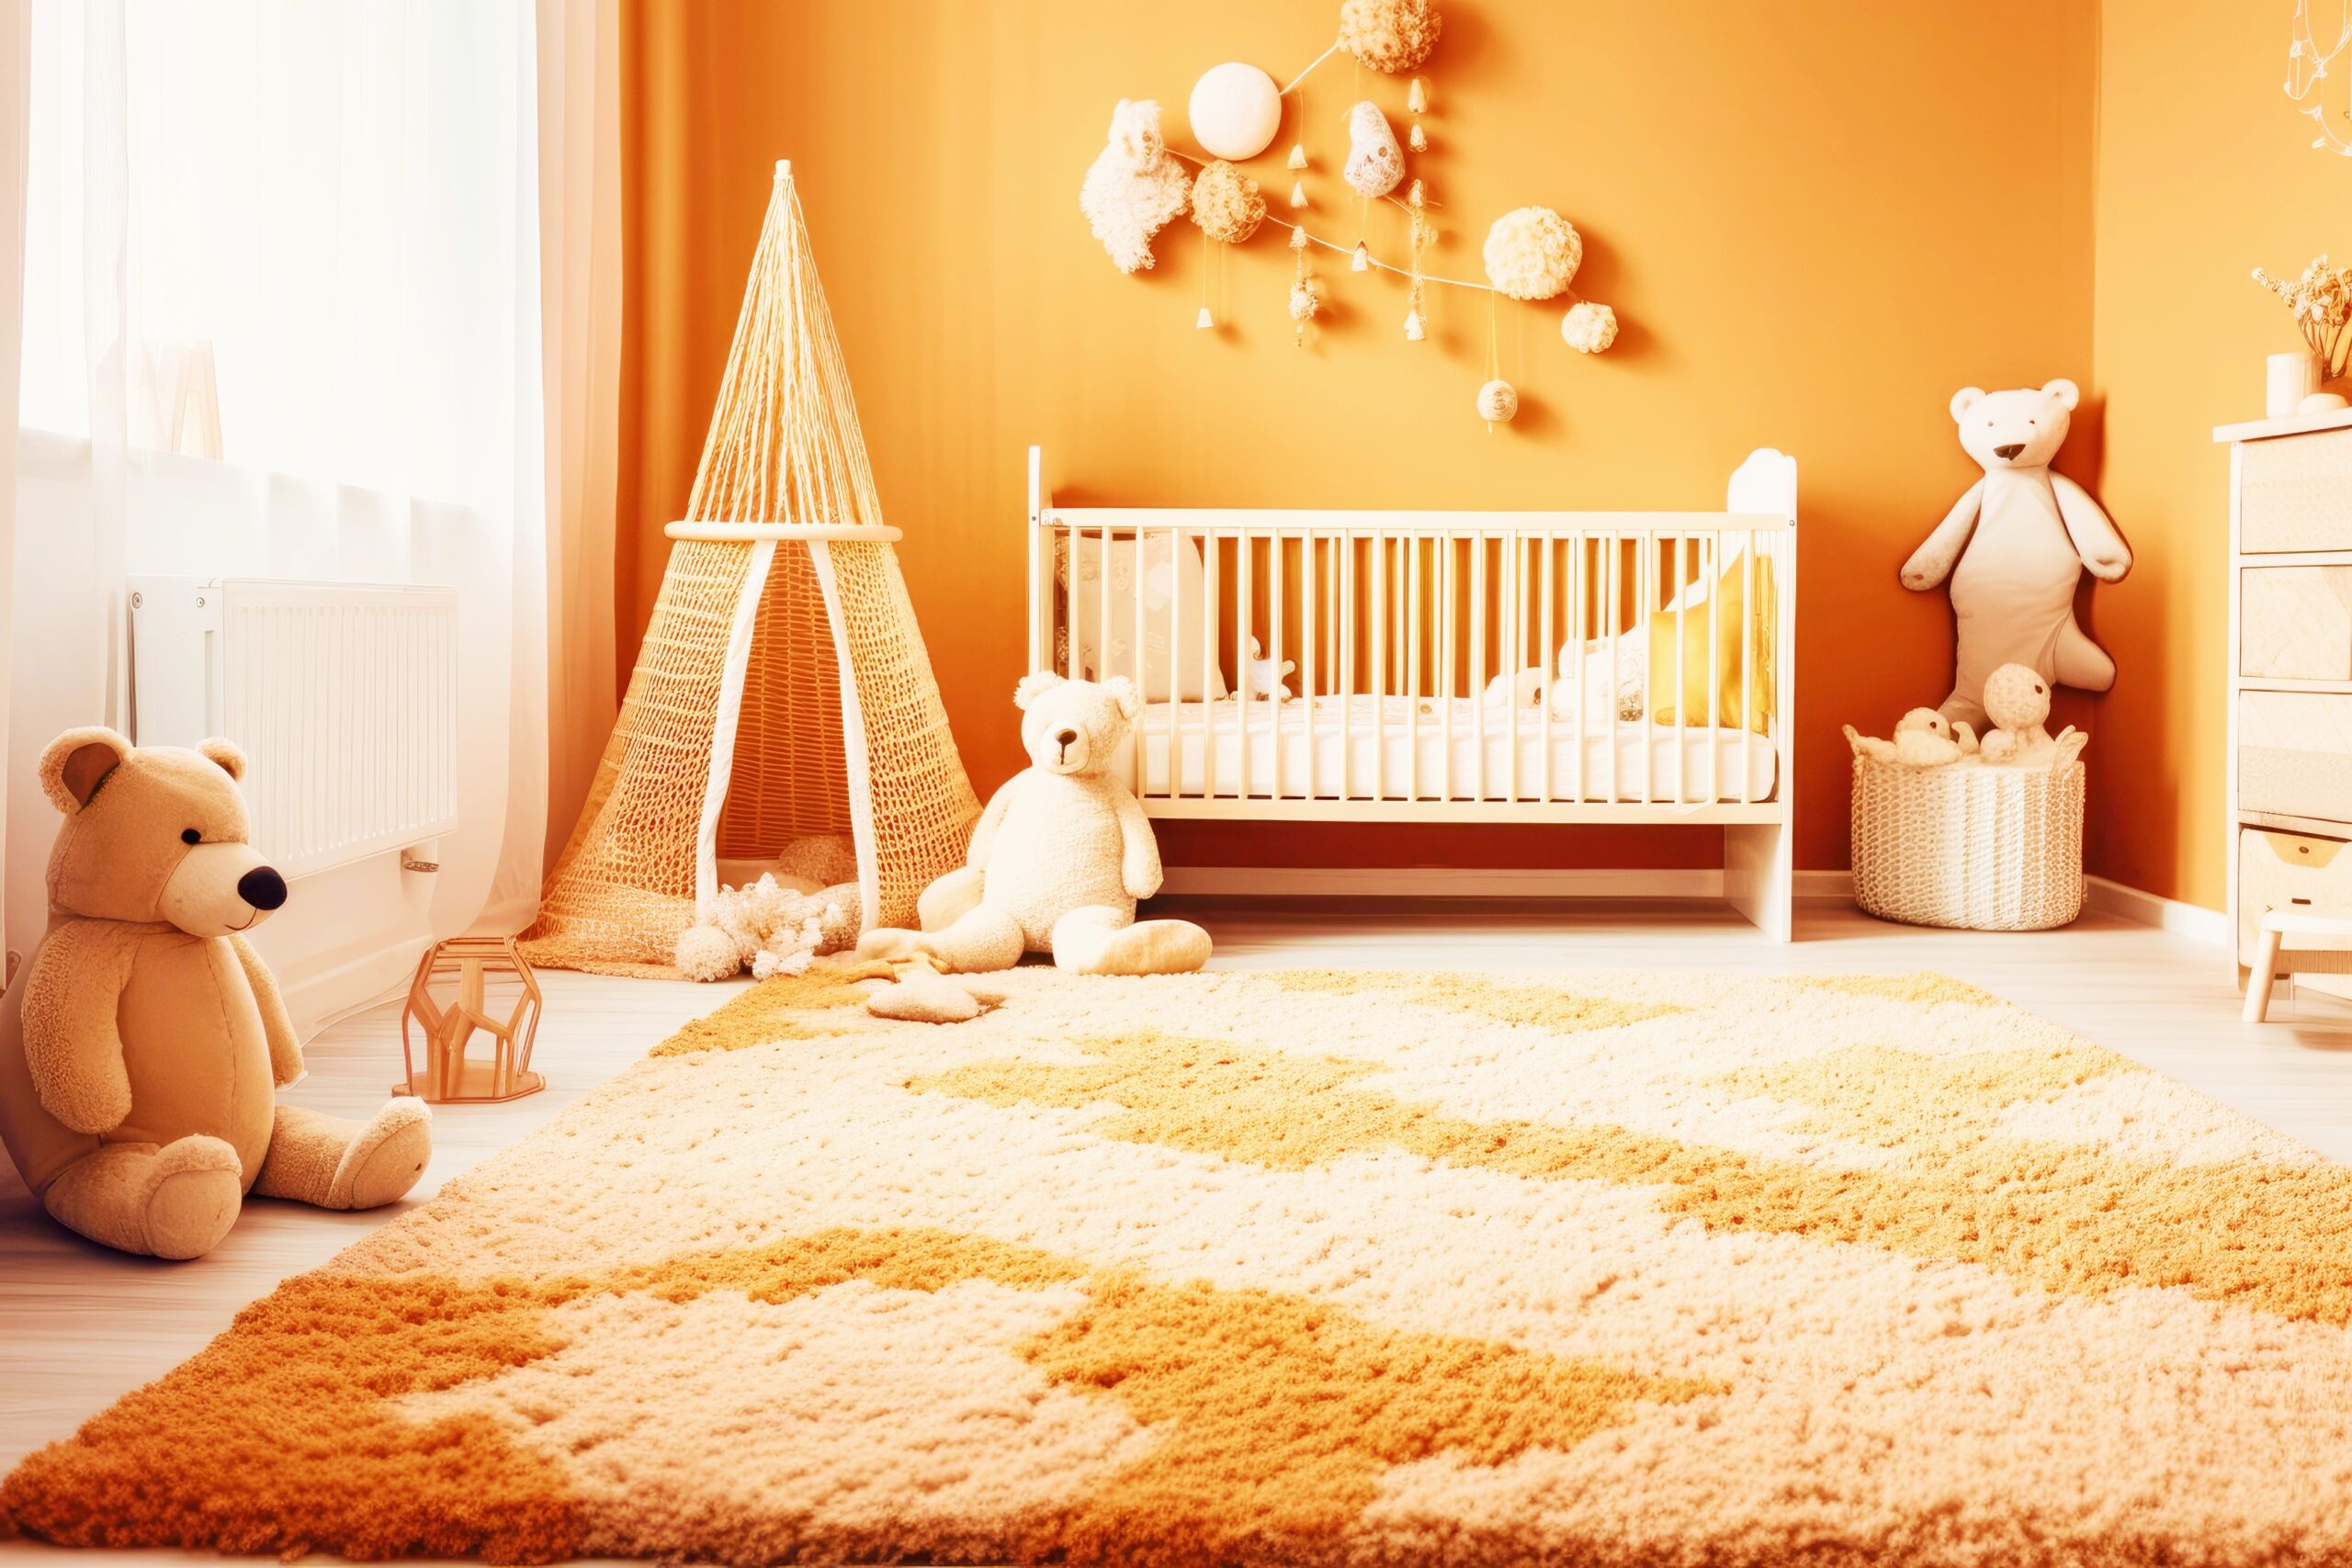 <img src="orange.jpg" alt="orange cozy autumn bedroom for kids"/>